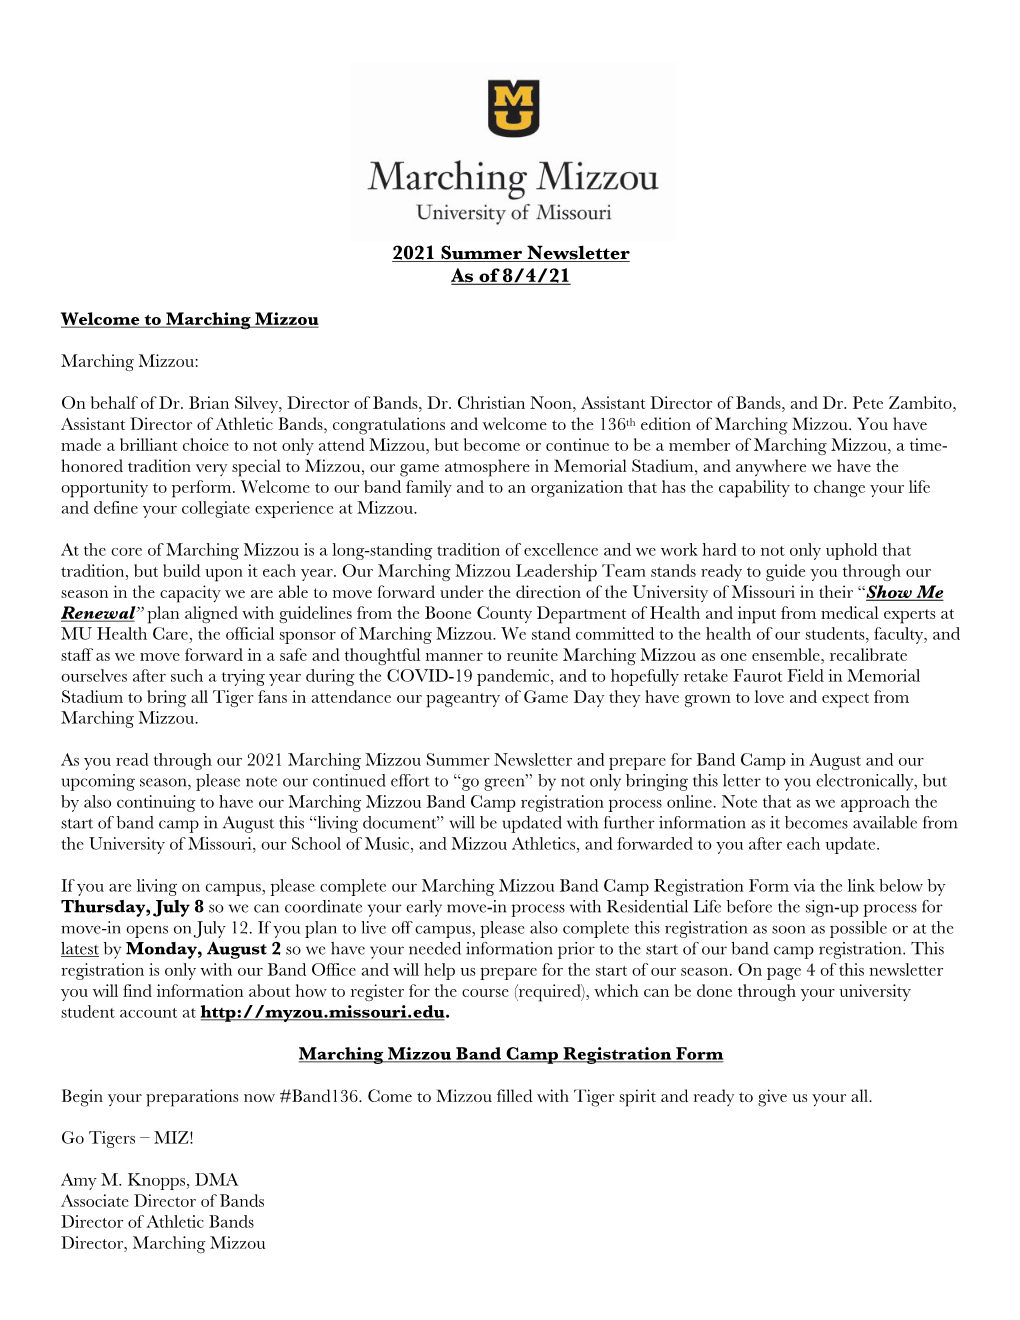 2021 Marching Mizzou Summer Newsletter